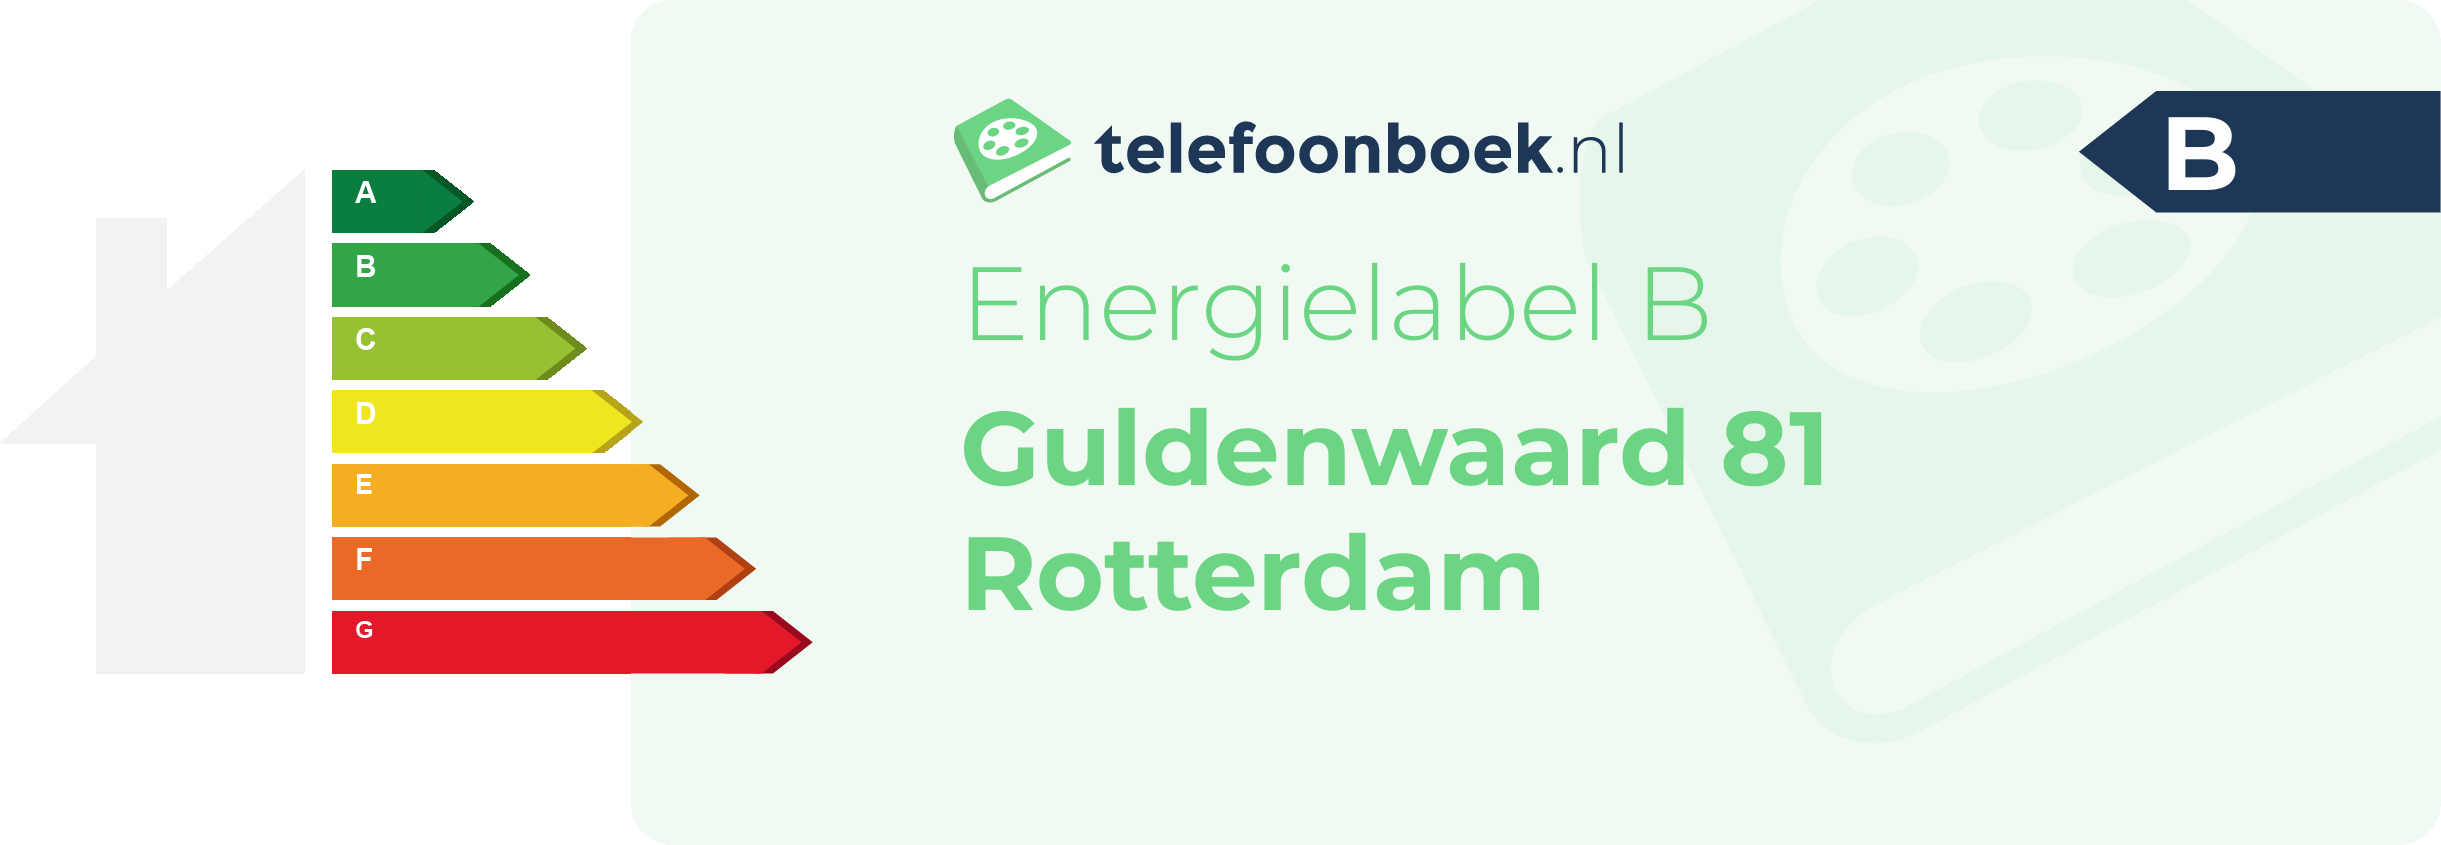 Energielabel Guldenwaard 81 Rotterdam